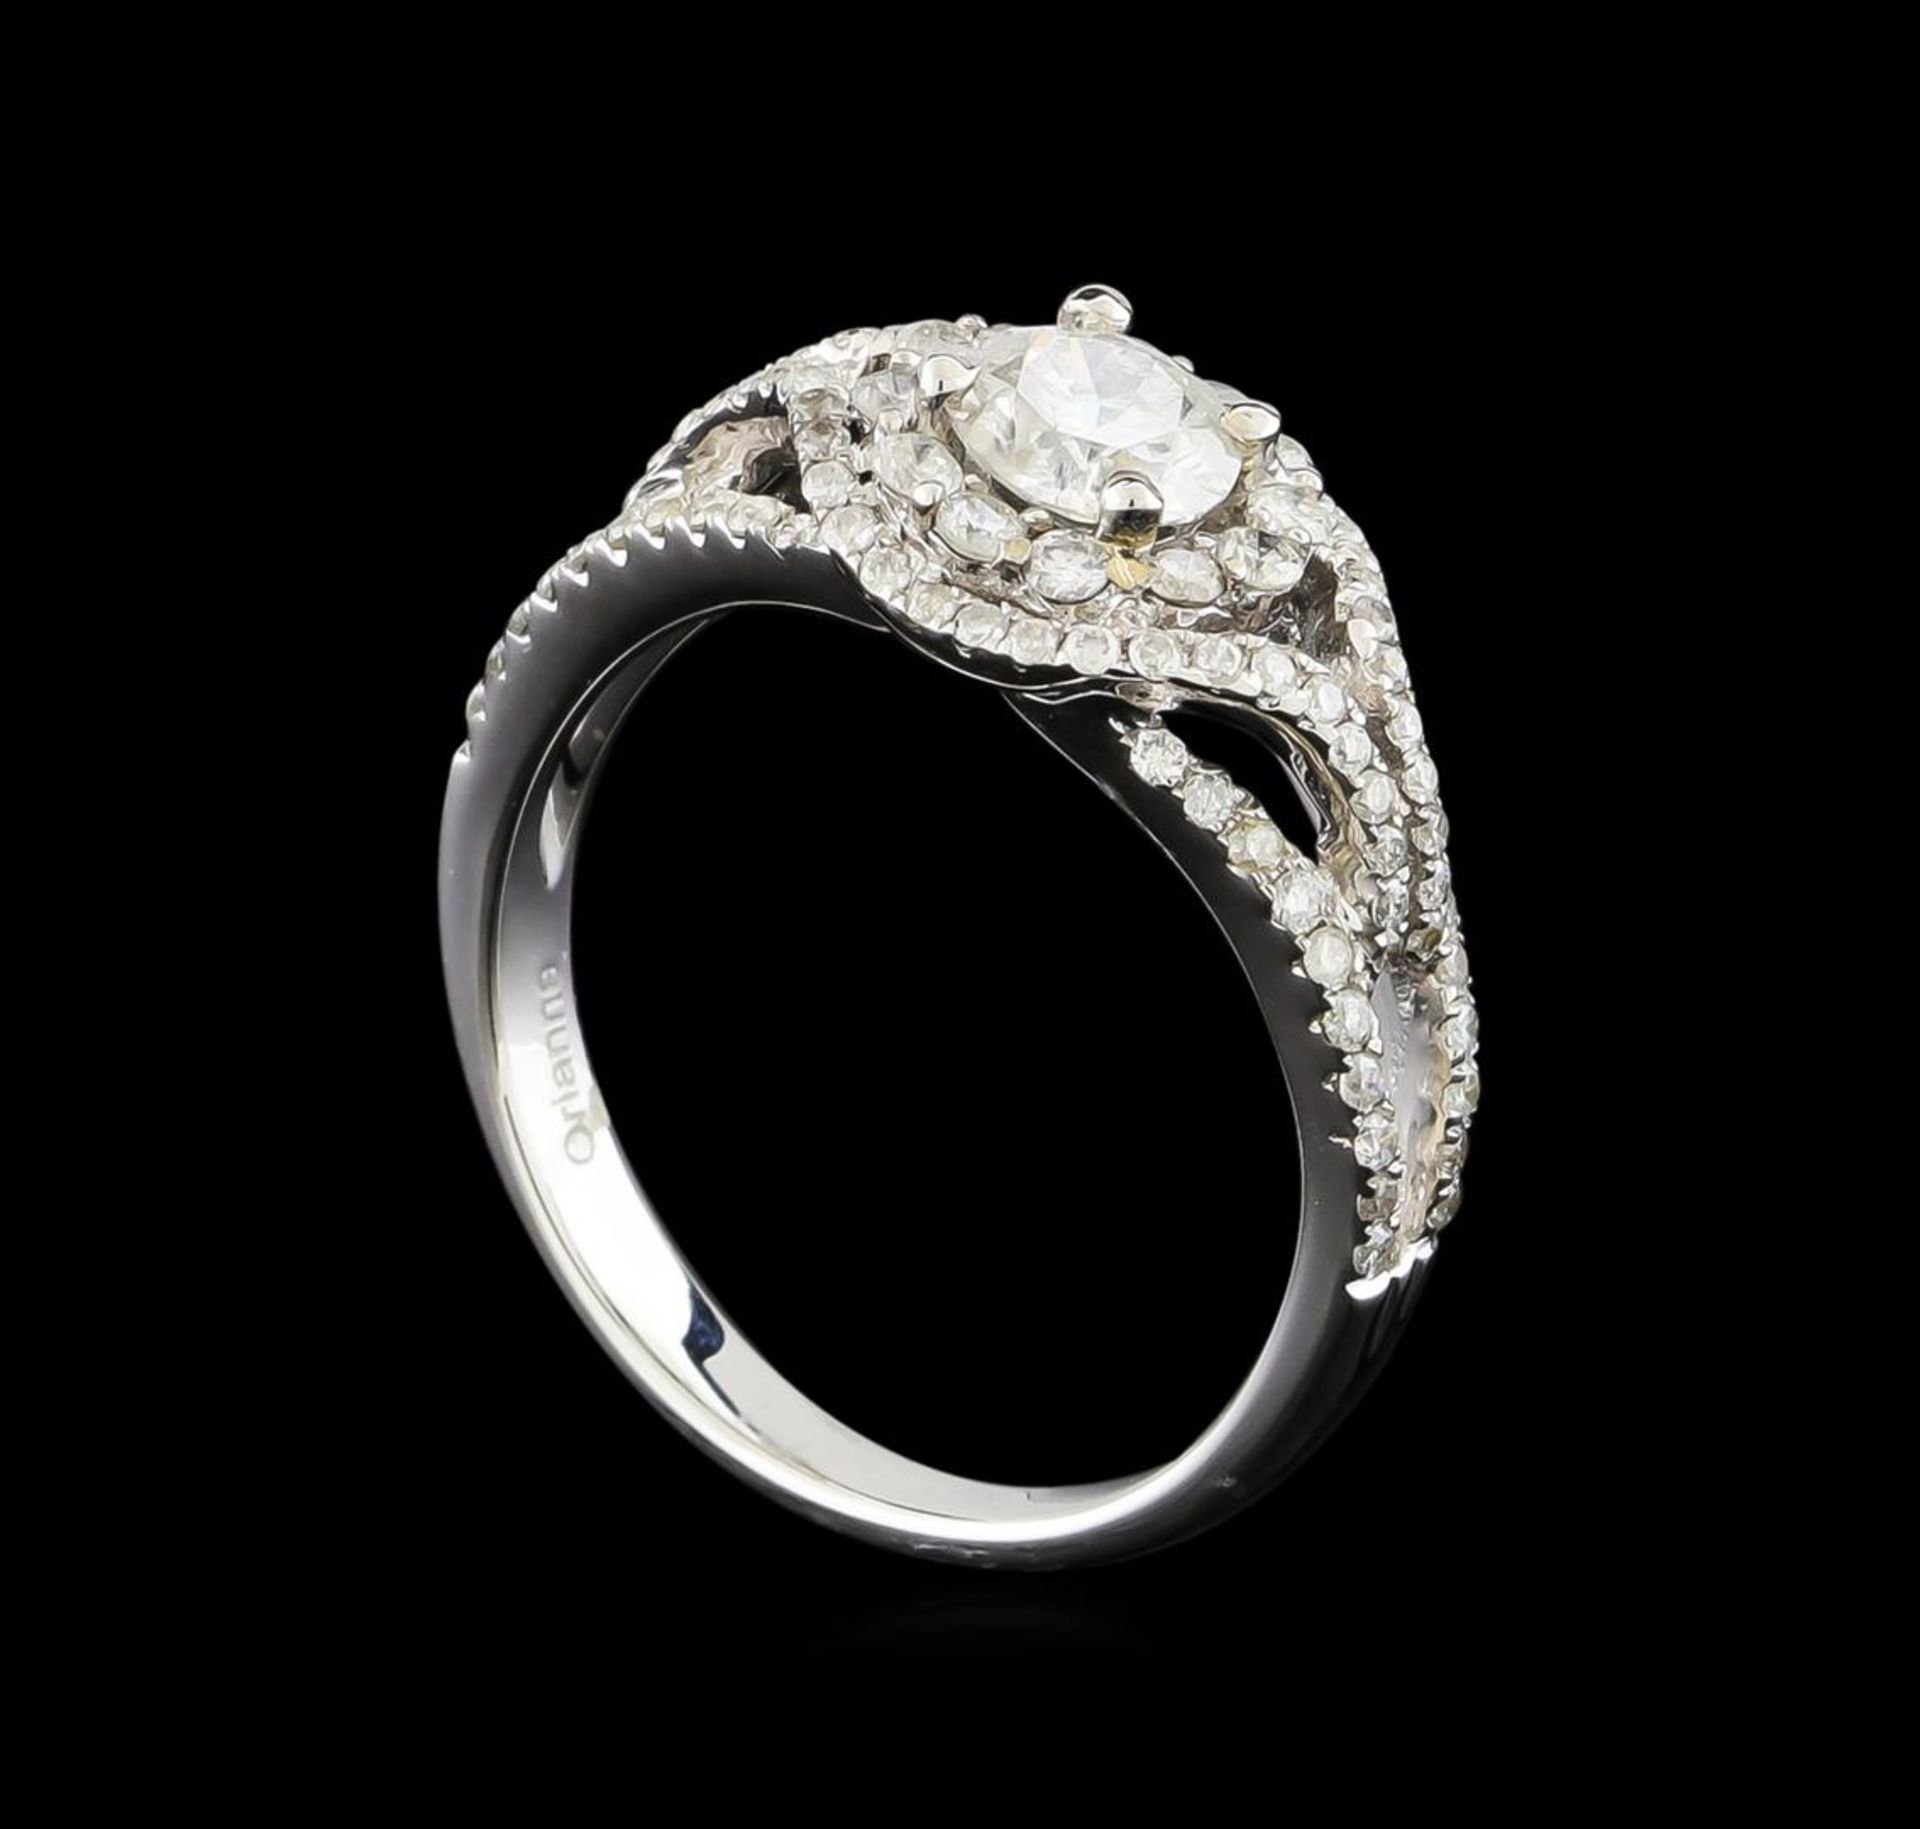 14KT White Gold 1.17 ctw Diamond Ring - Image 4 of 5